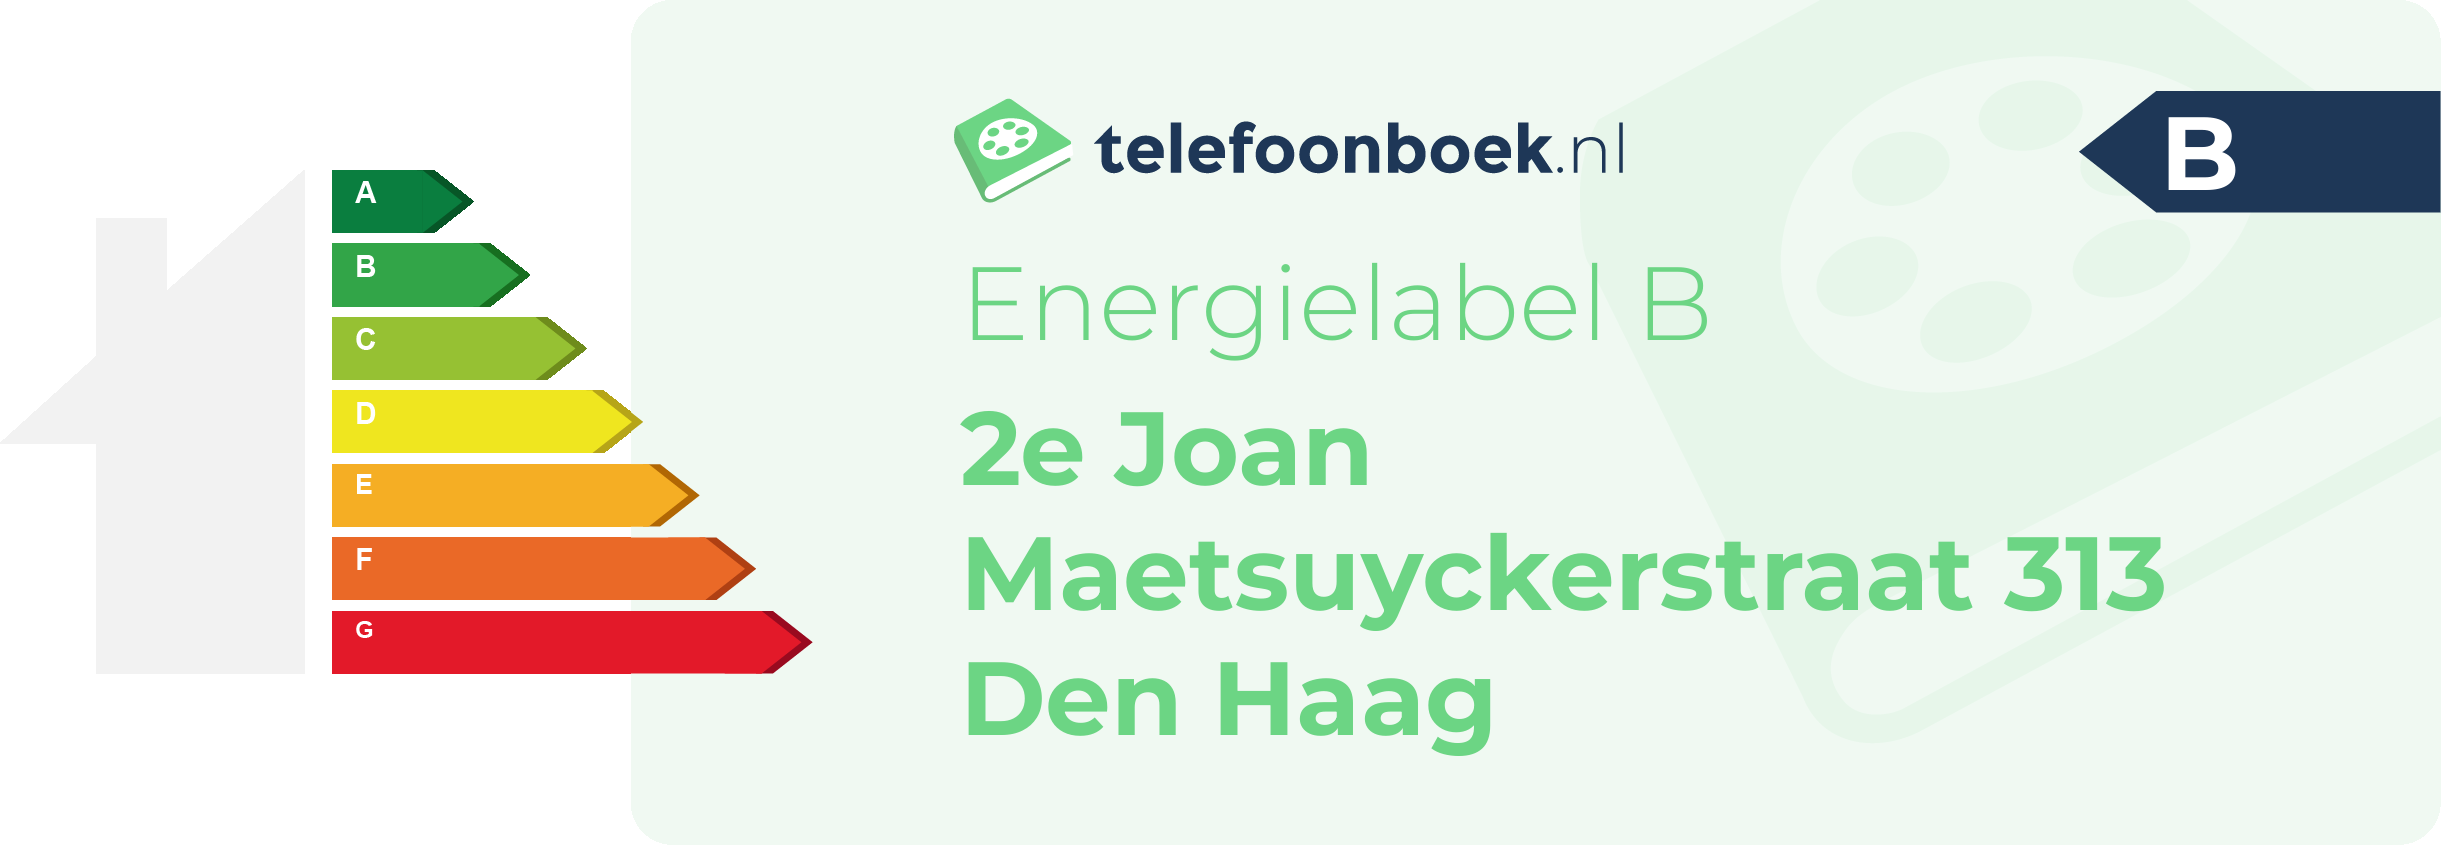 Energielabel 2e Joan Maetsuyckerstraat 313 Den Haag